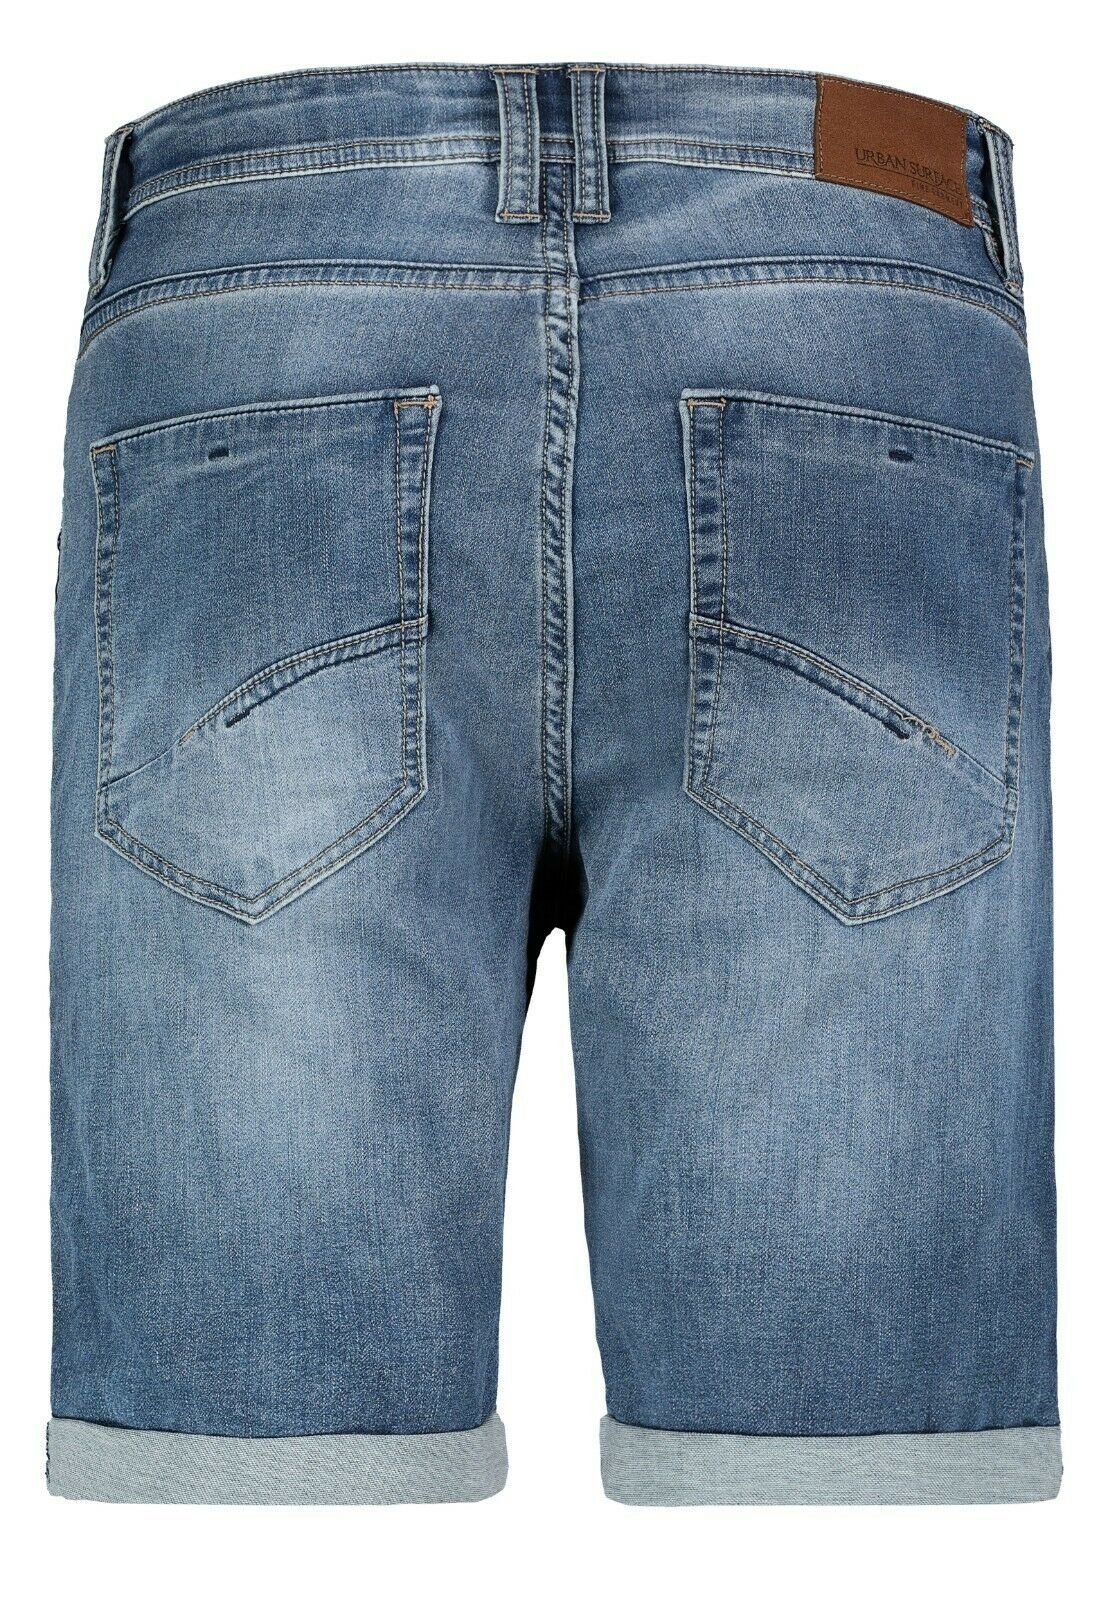 Herren Freizeit Middle Urban Bermuda Jeans Surface Bermudas Denim Blue kurze Shorts Hose Jogging Sweat